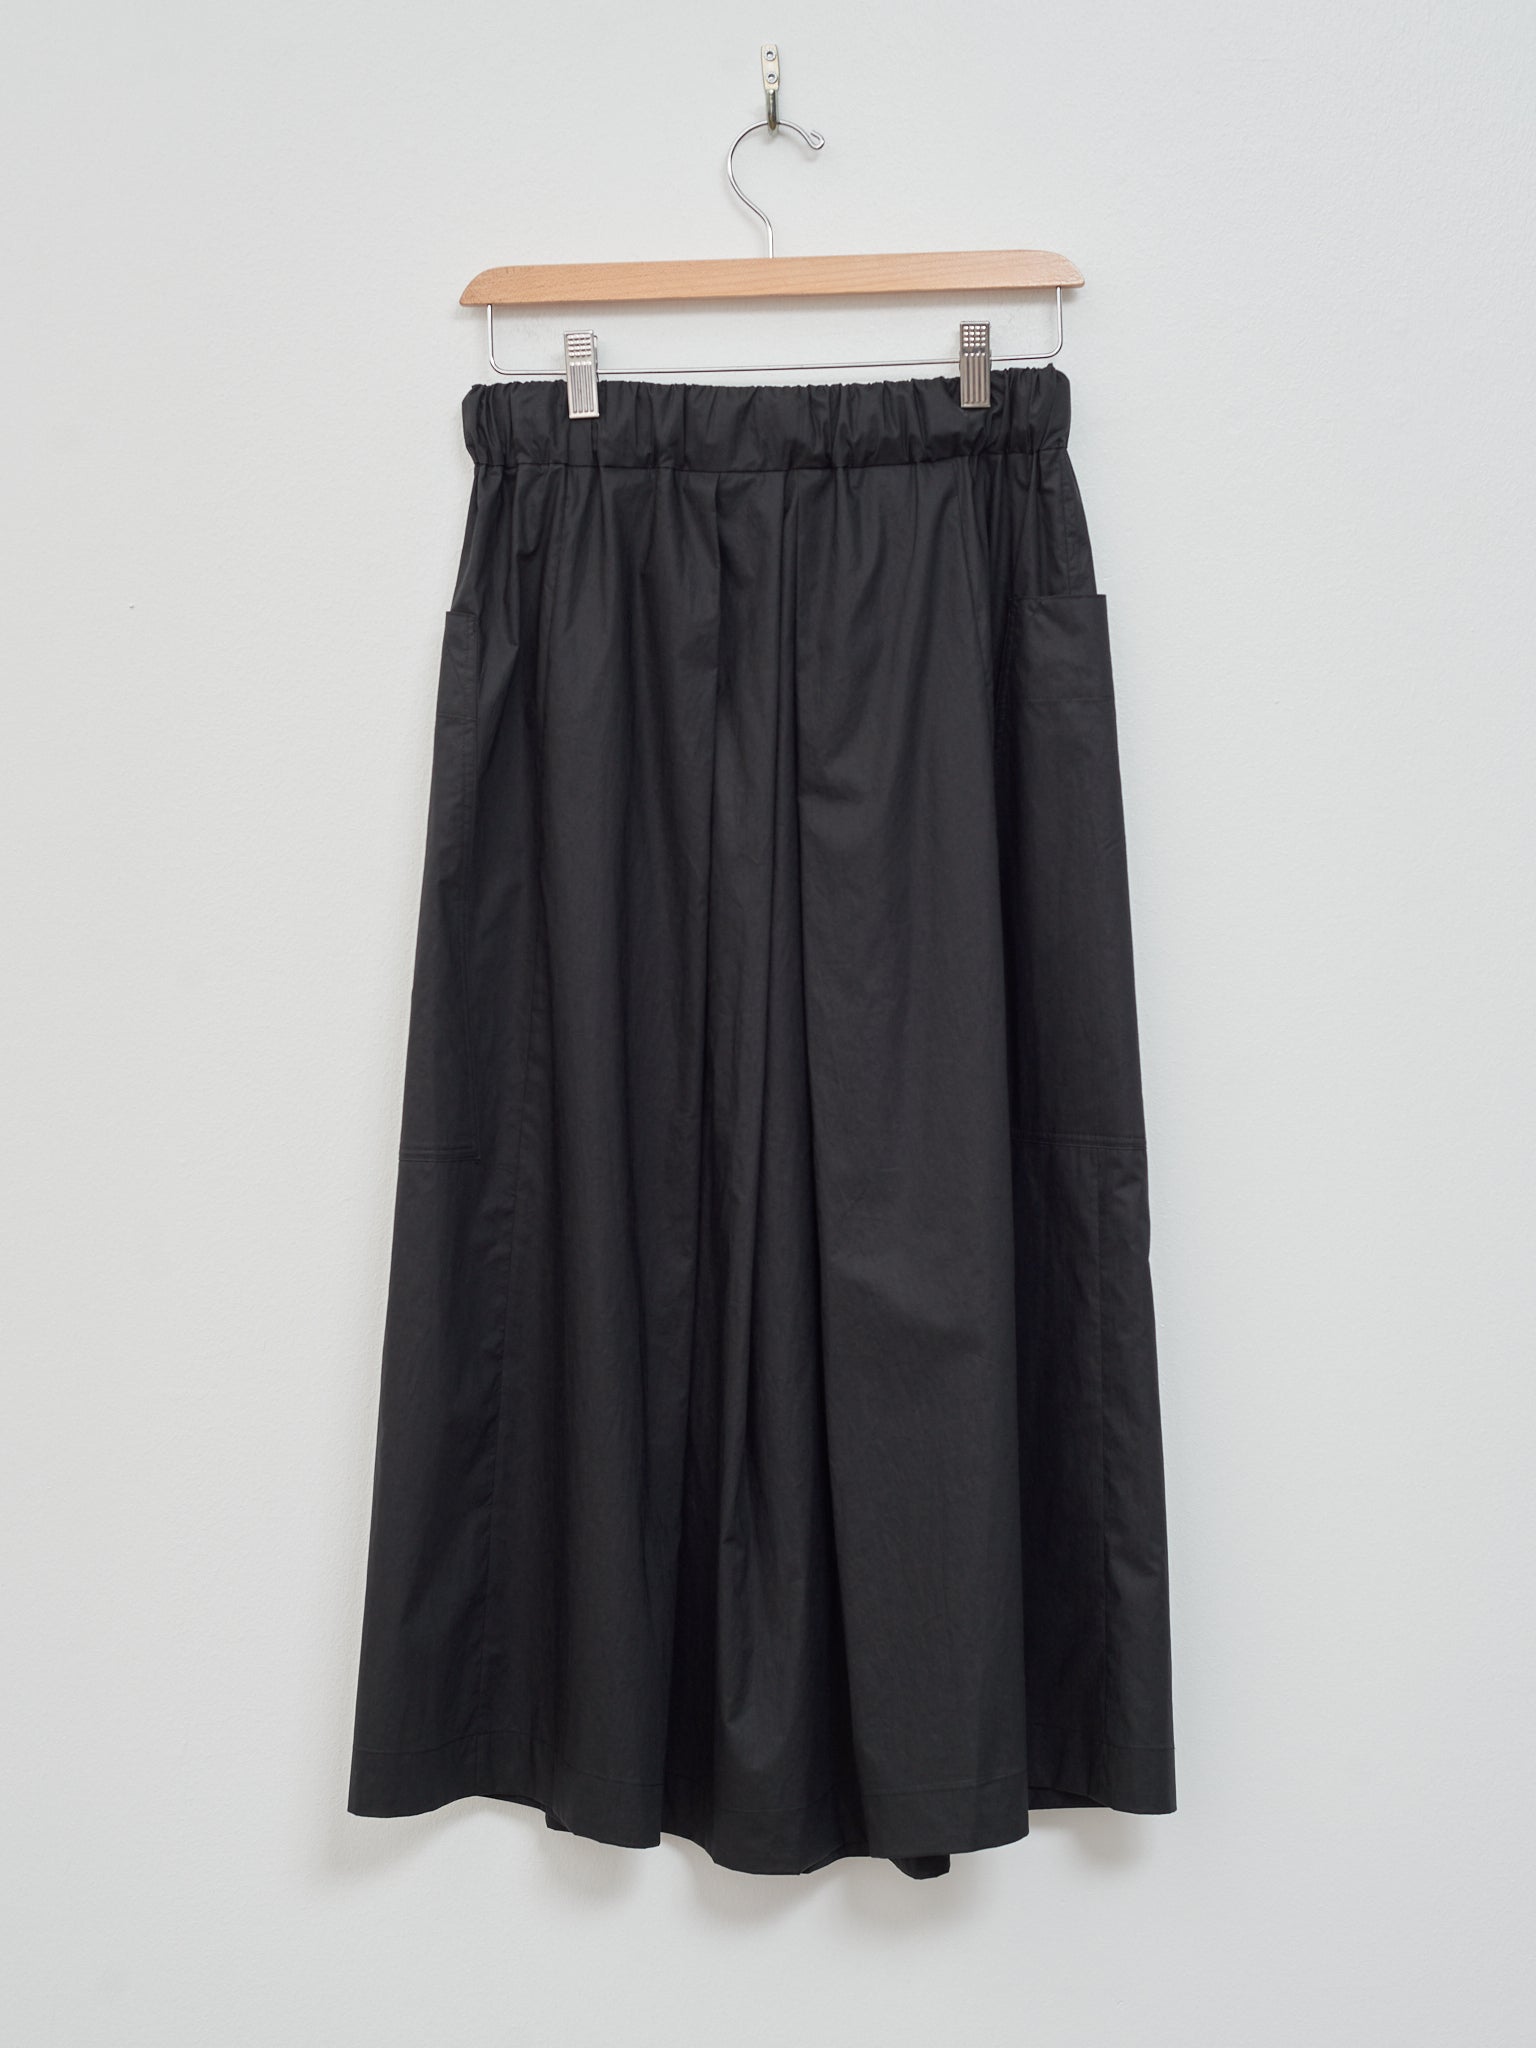 Namu Shop - Nicholson & Nicholson Kanon Poplin Skirt - Black